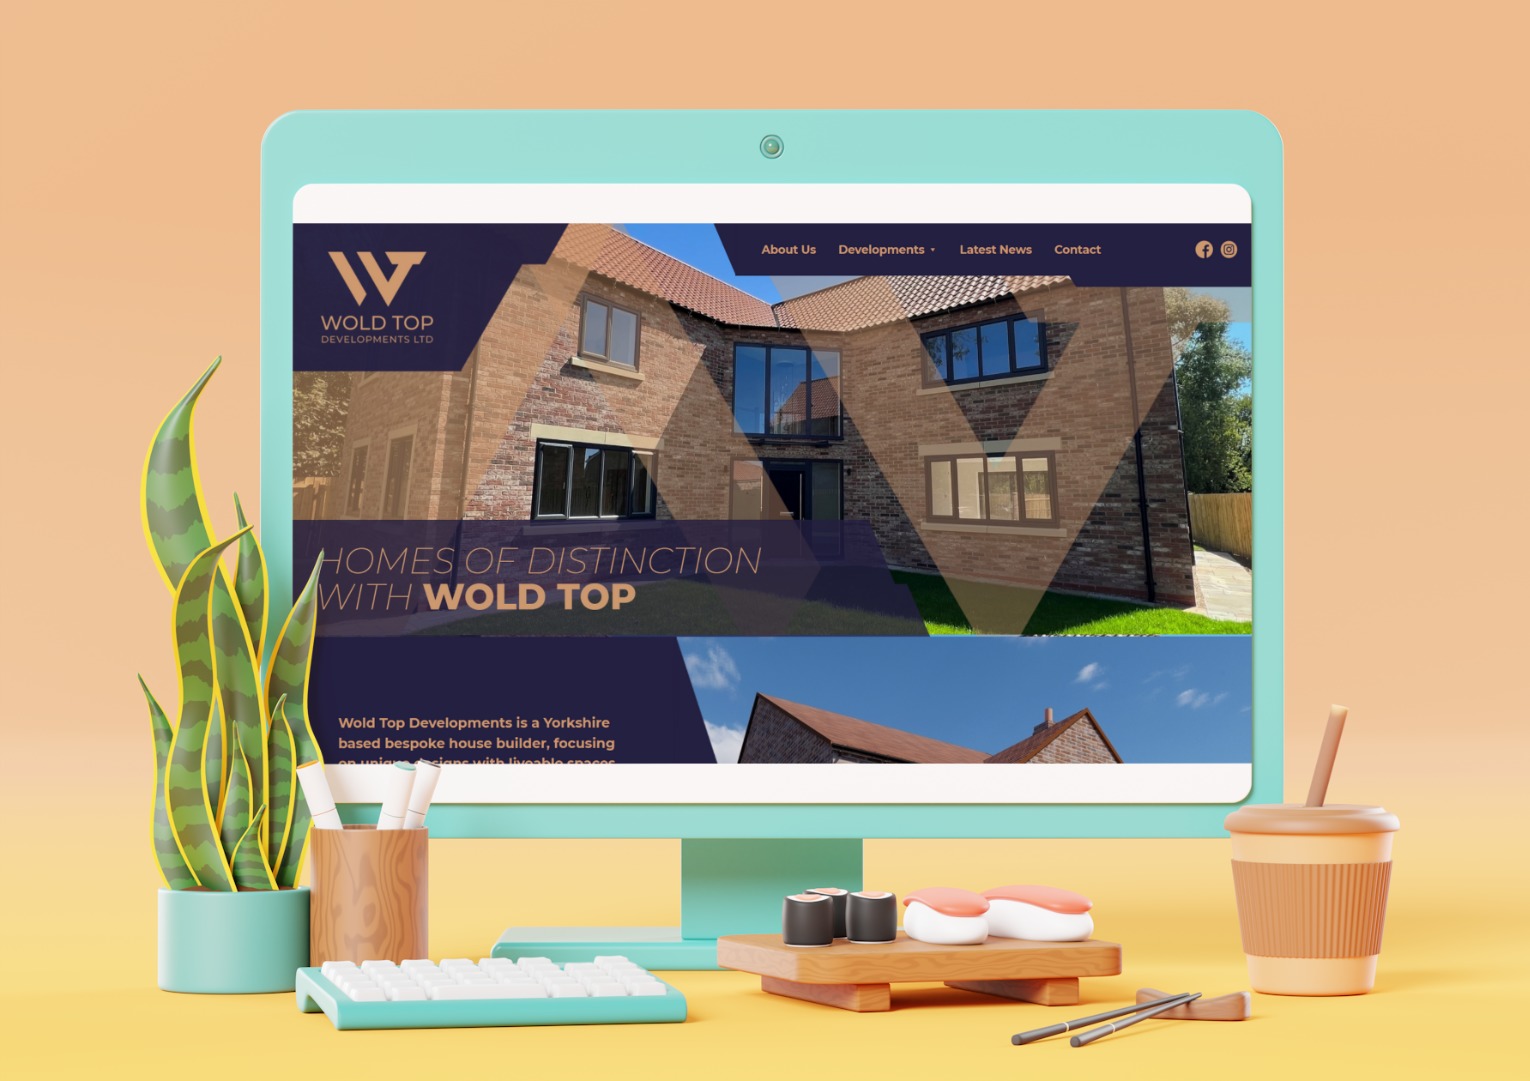 Wold Top website design shown on a desktop computer